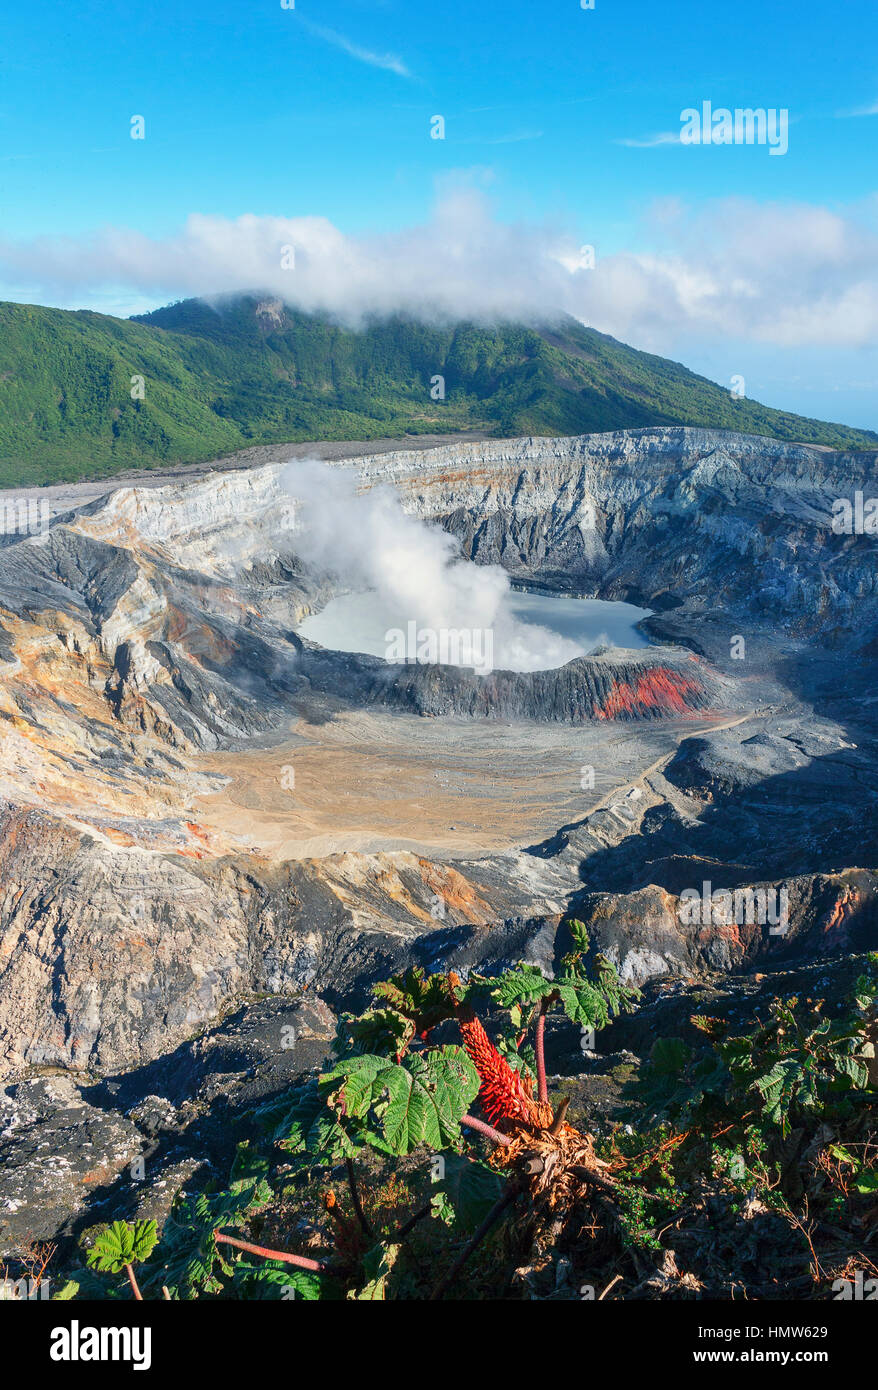 Caldera with crater lake, steam rising from Poas Volcano, Poas Volcano National Park, Costa Rica Stock Photo